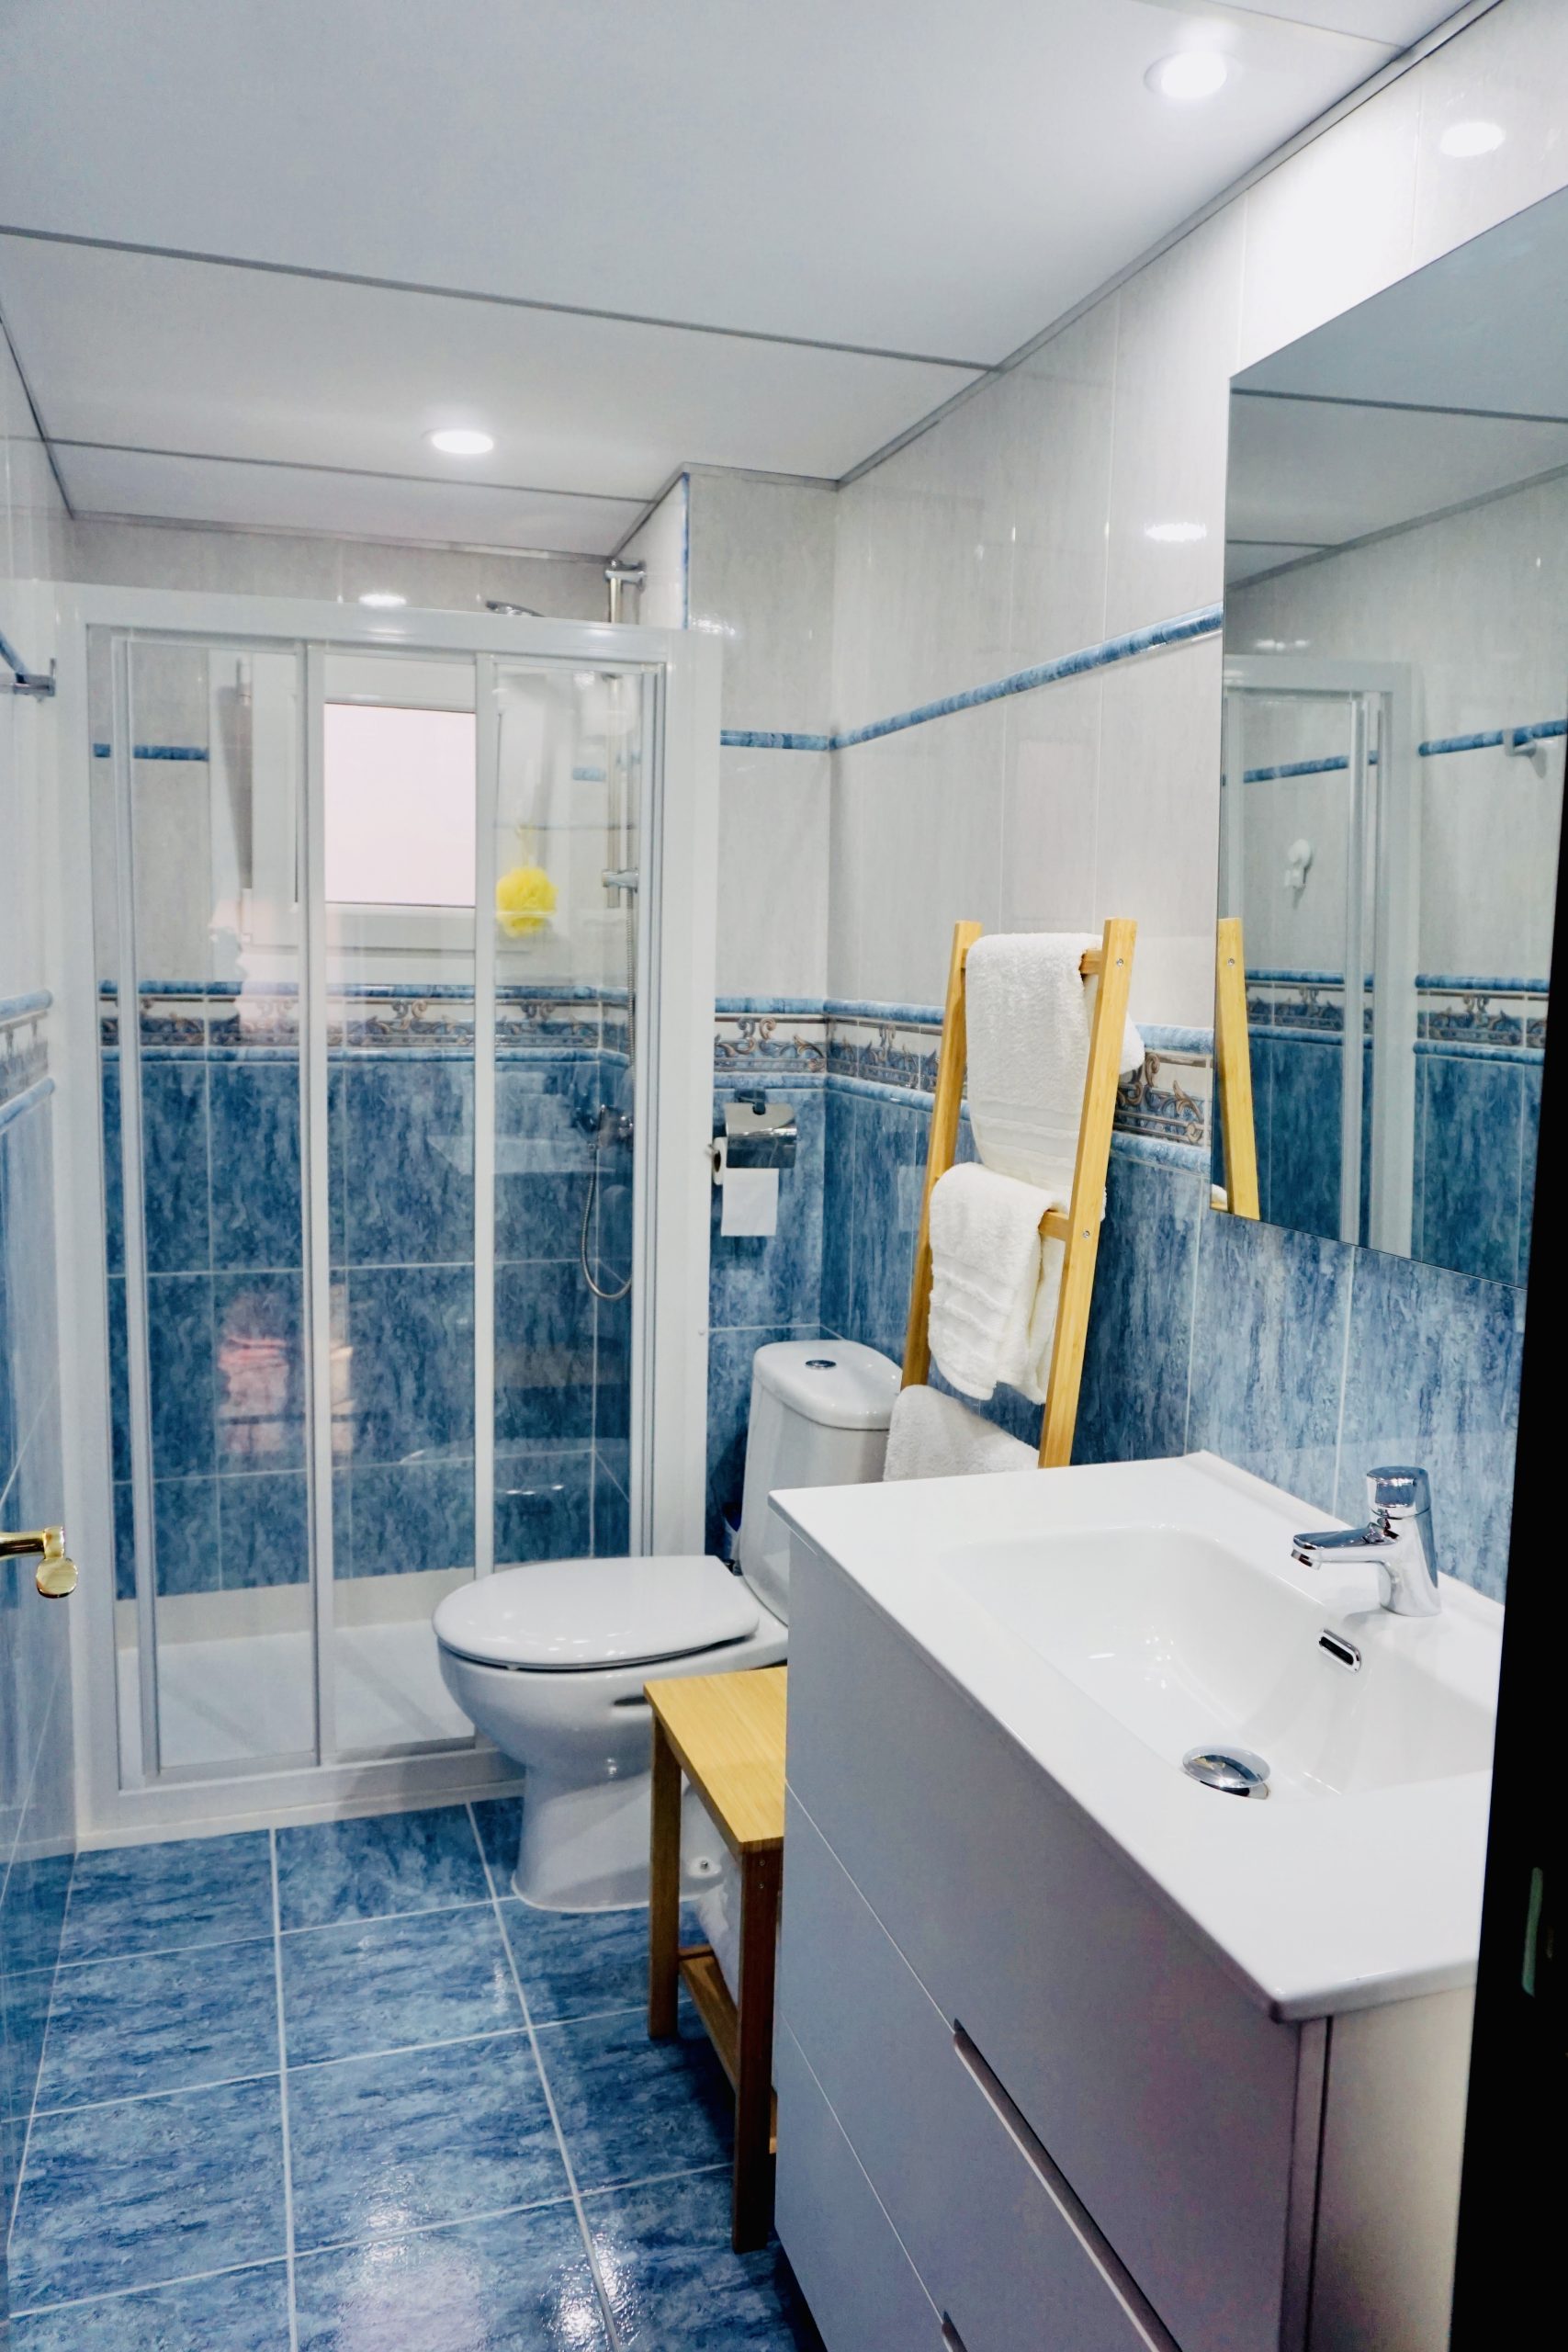 apartment for rent in Malaga - bathroom